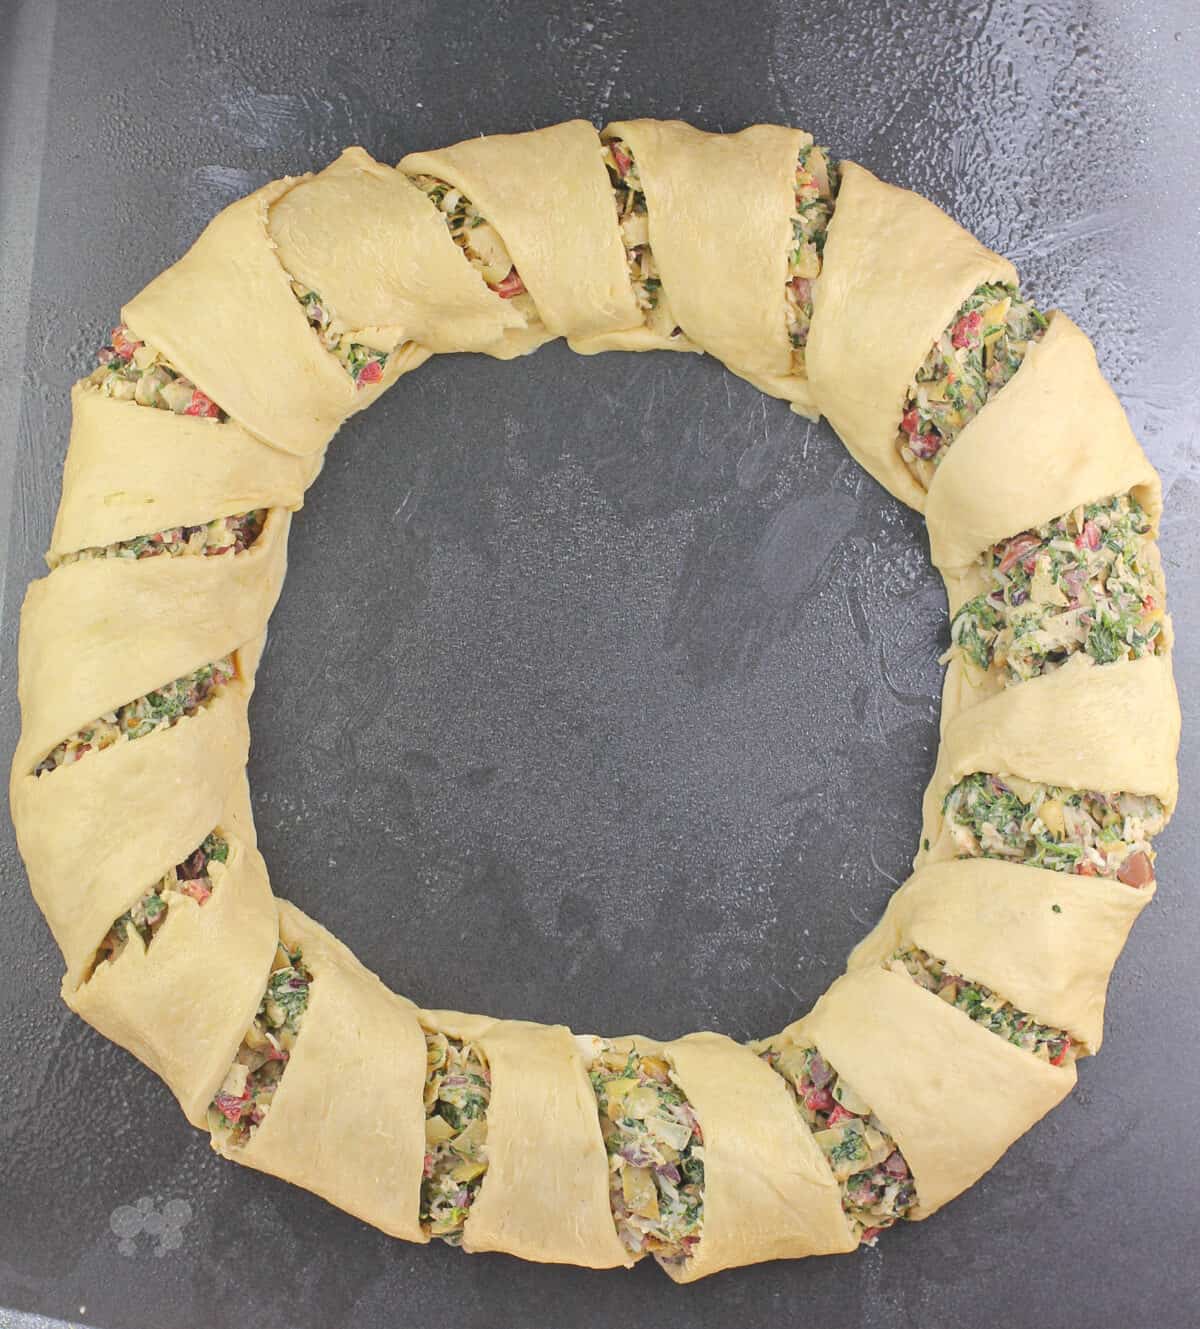 assembled crescent ring on bake sheet